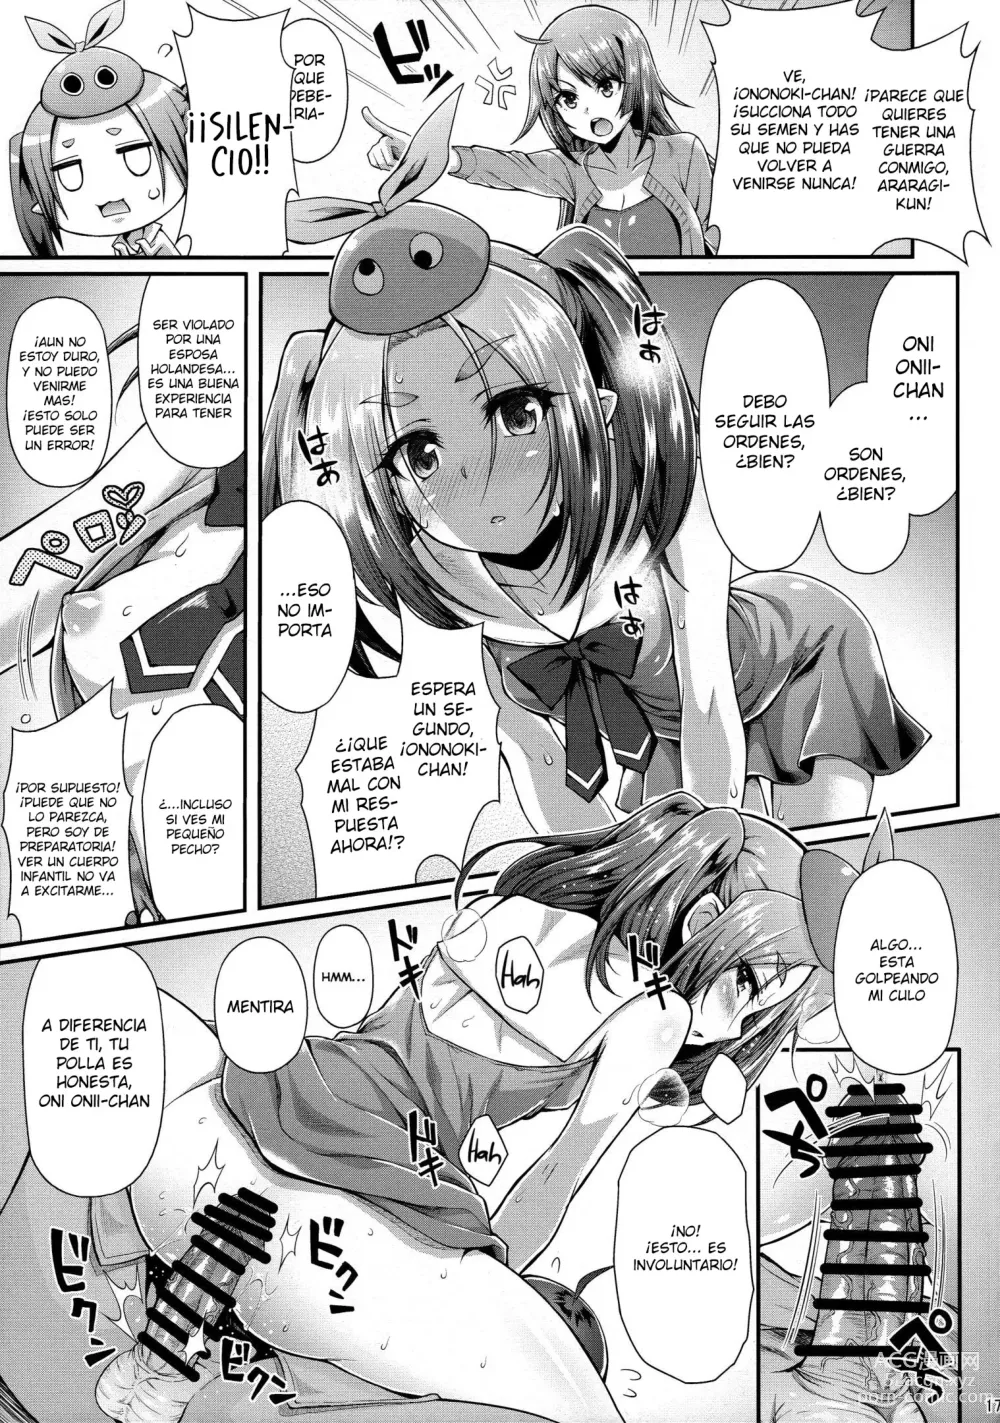 Page 16 of doujinshi Pachimonogatari Part 12: Koyomi Reform